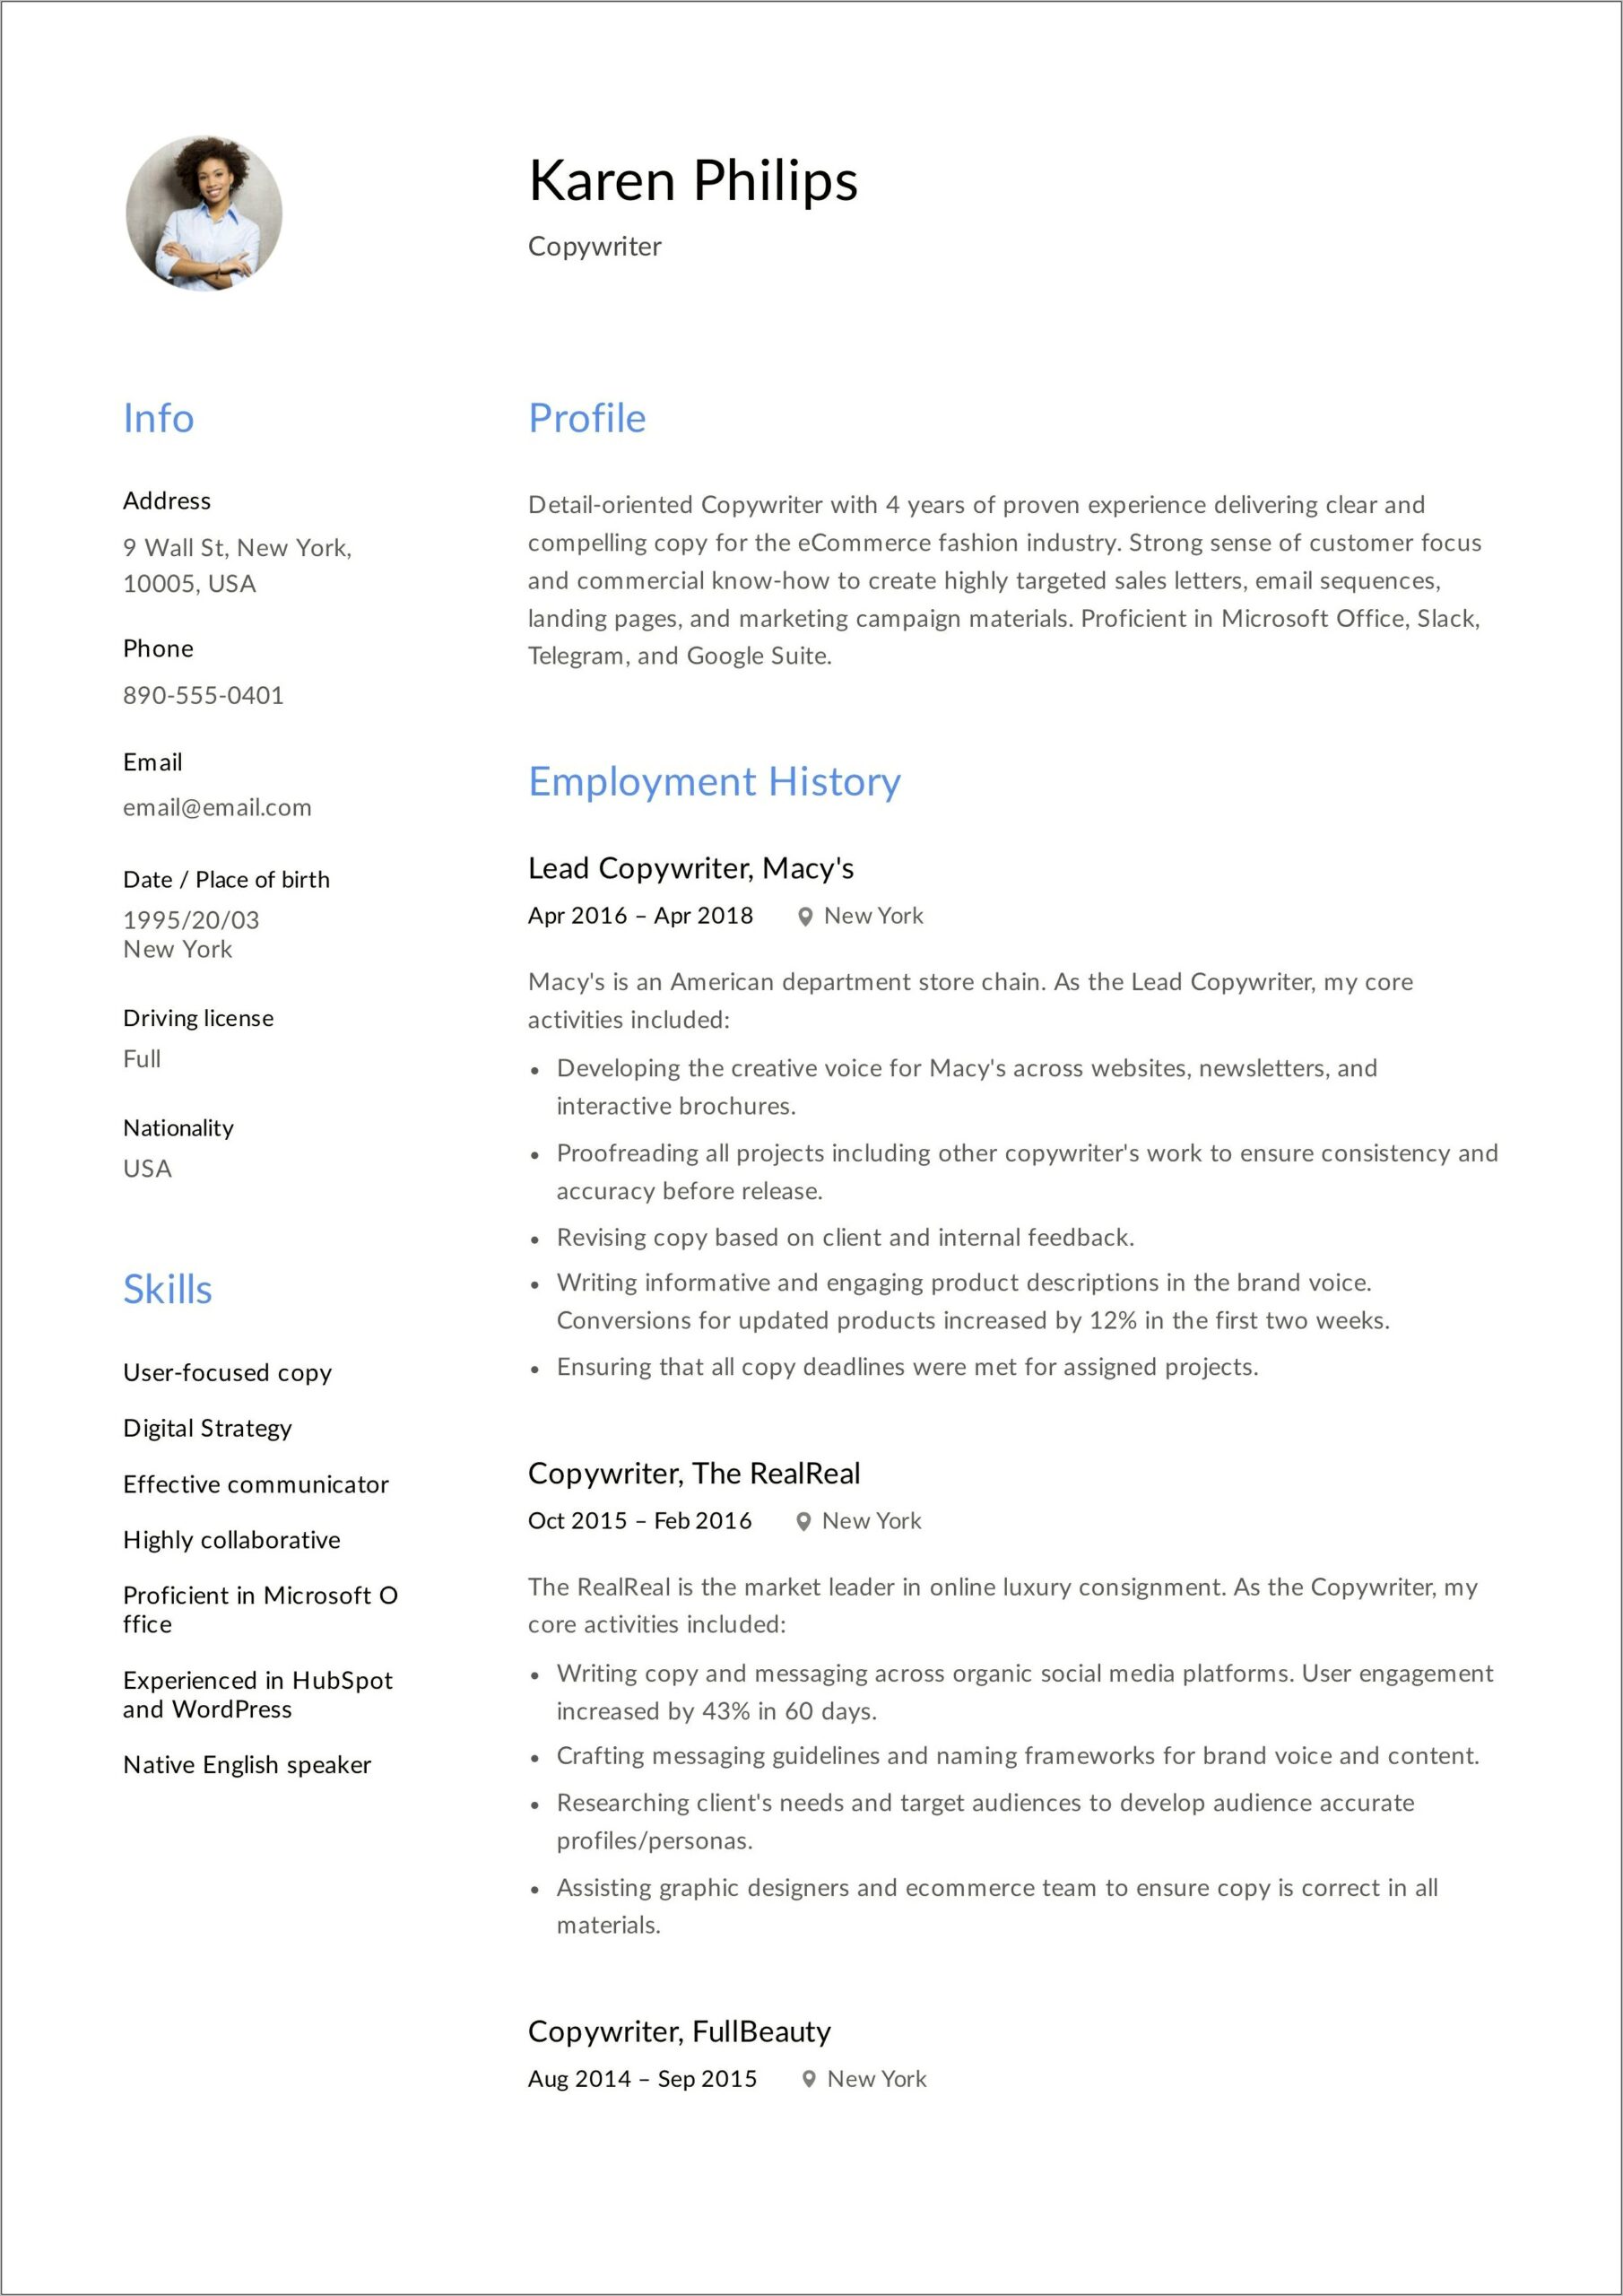 Job Description For Copywriter Resume